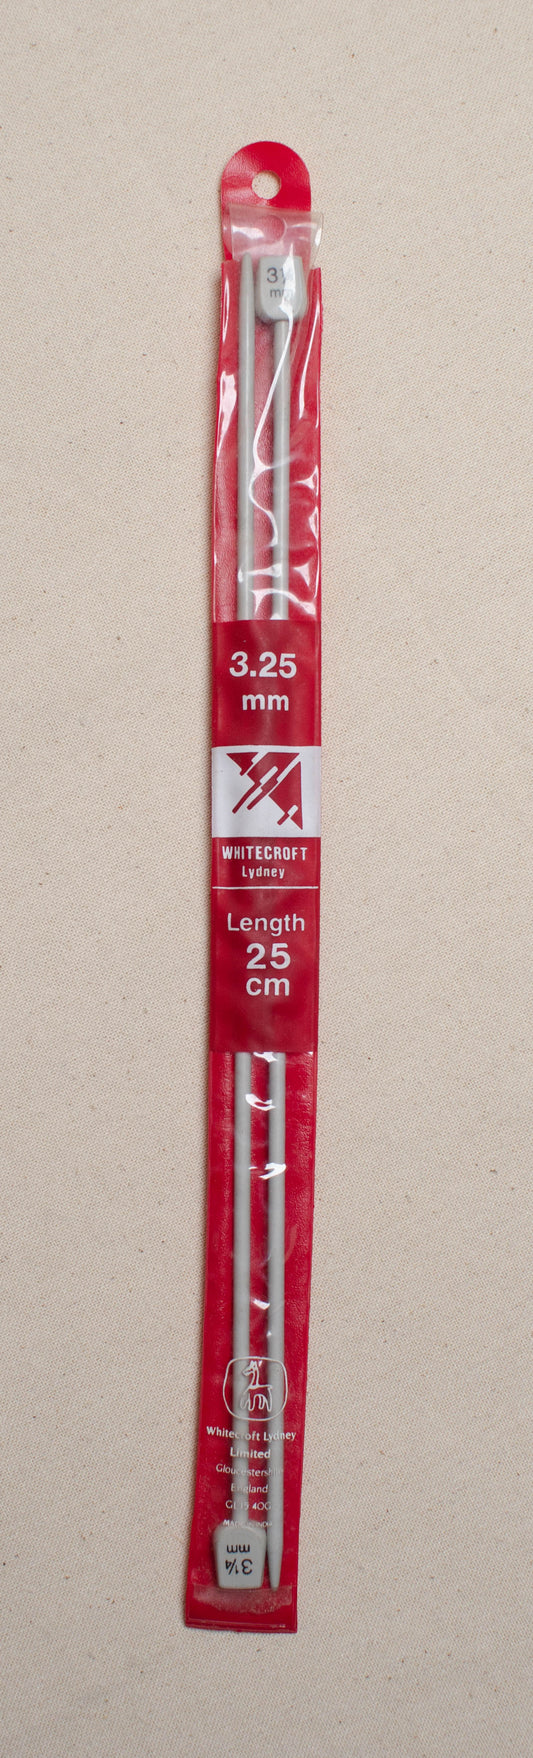 Whitecroft 30cm Knitting Needles - 25cm X 3.25mm